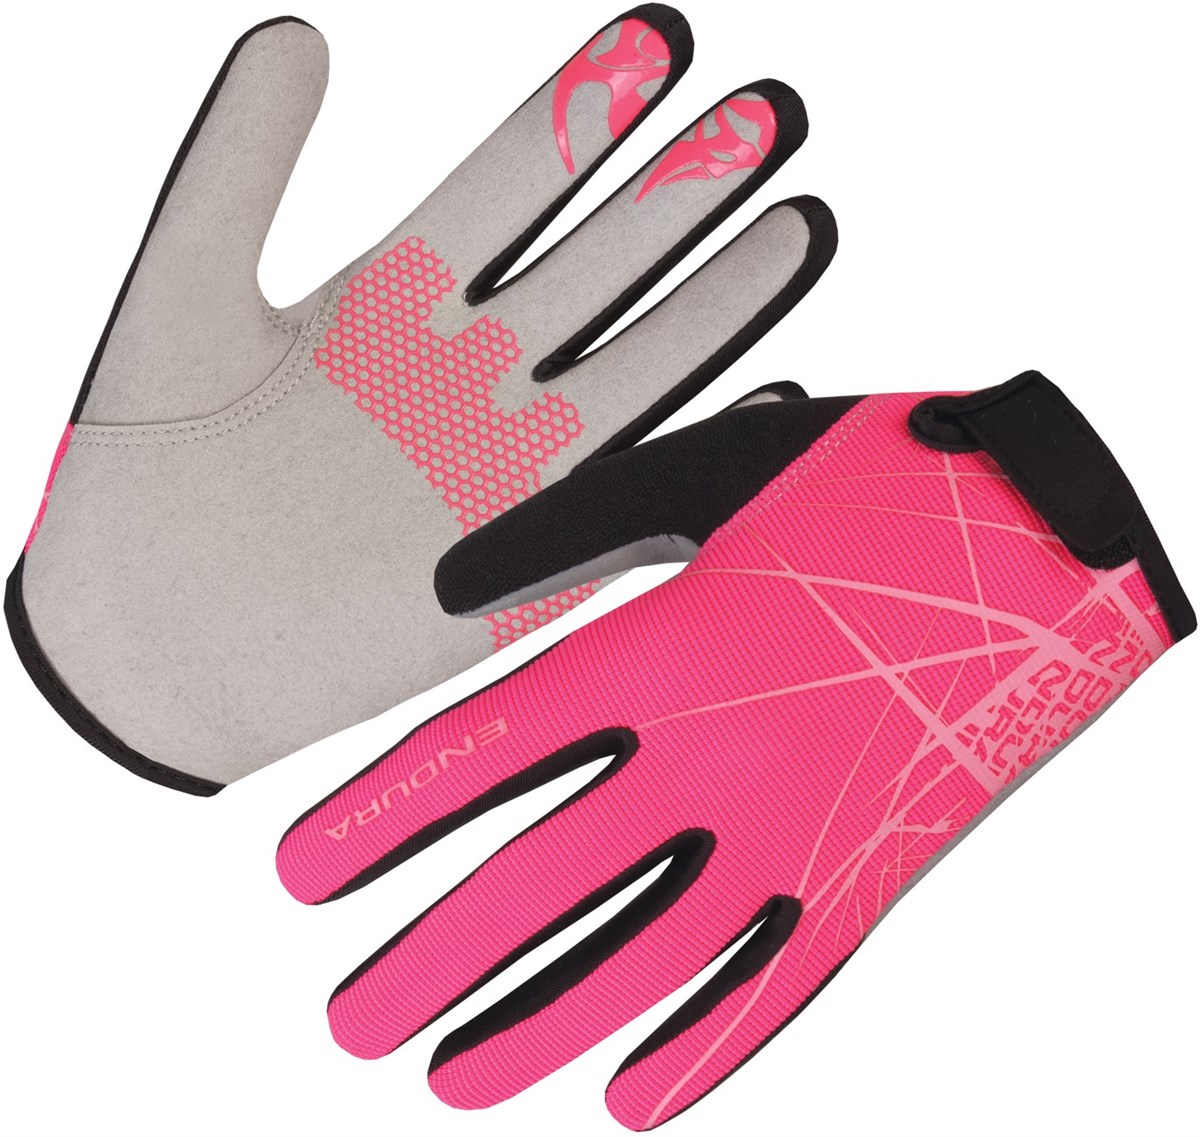 Endura Hummvee Long Finger Kids Cycling Gloves AW16 product image